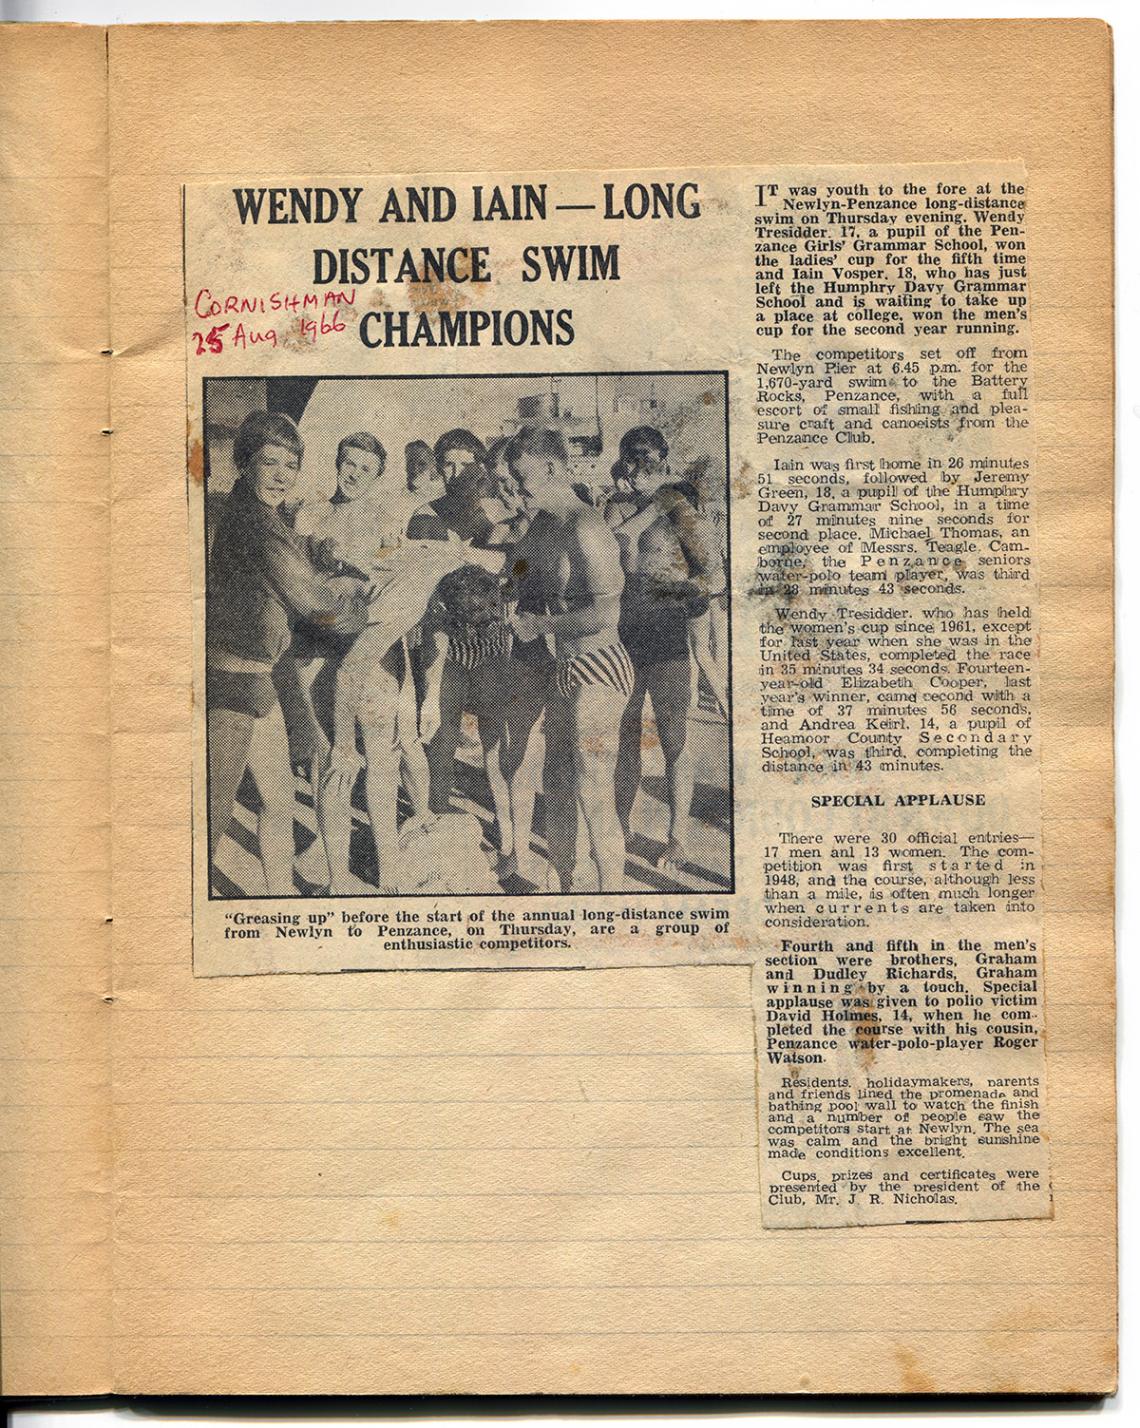 Newspaper cutting, long distance swim champions Wendy and Iain